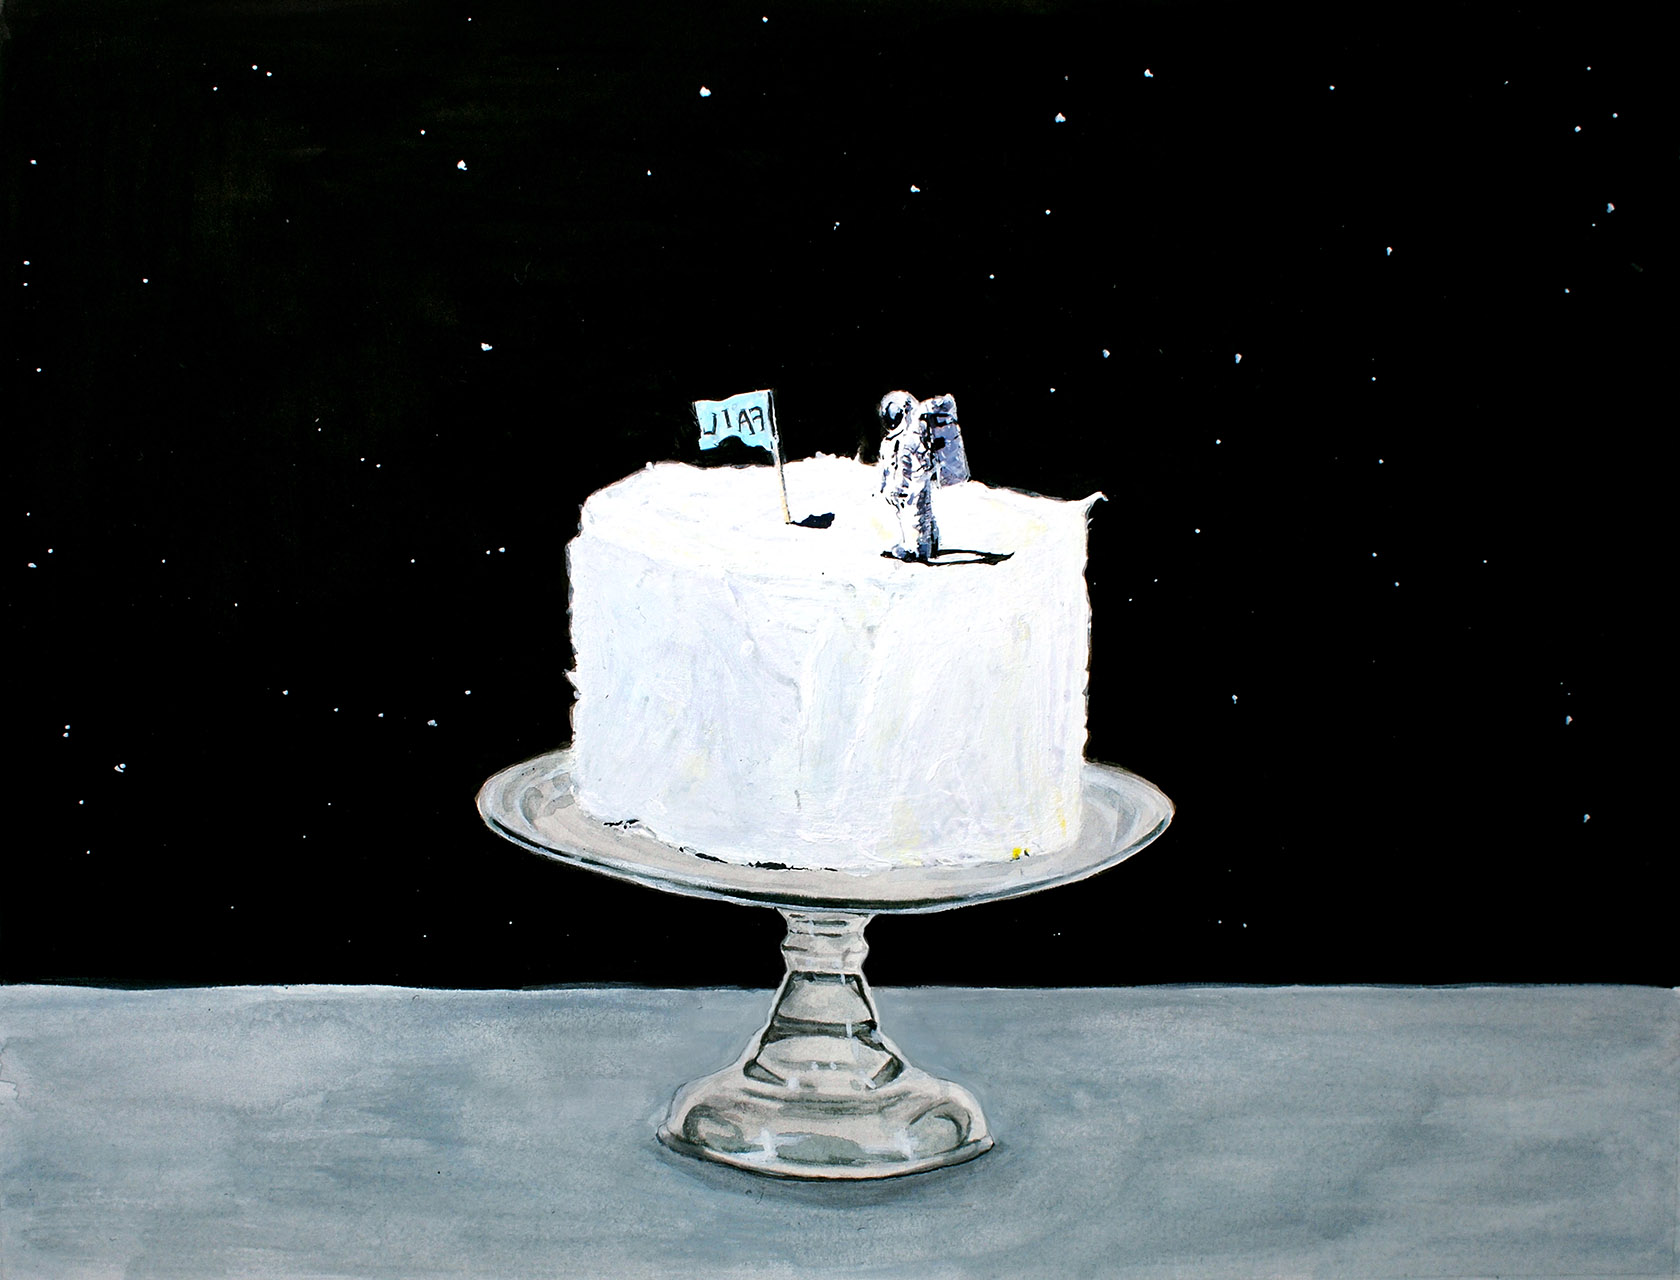 tram nguyen moon cake illustration